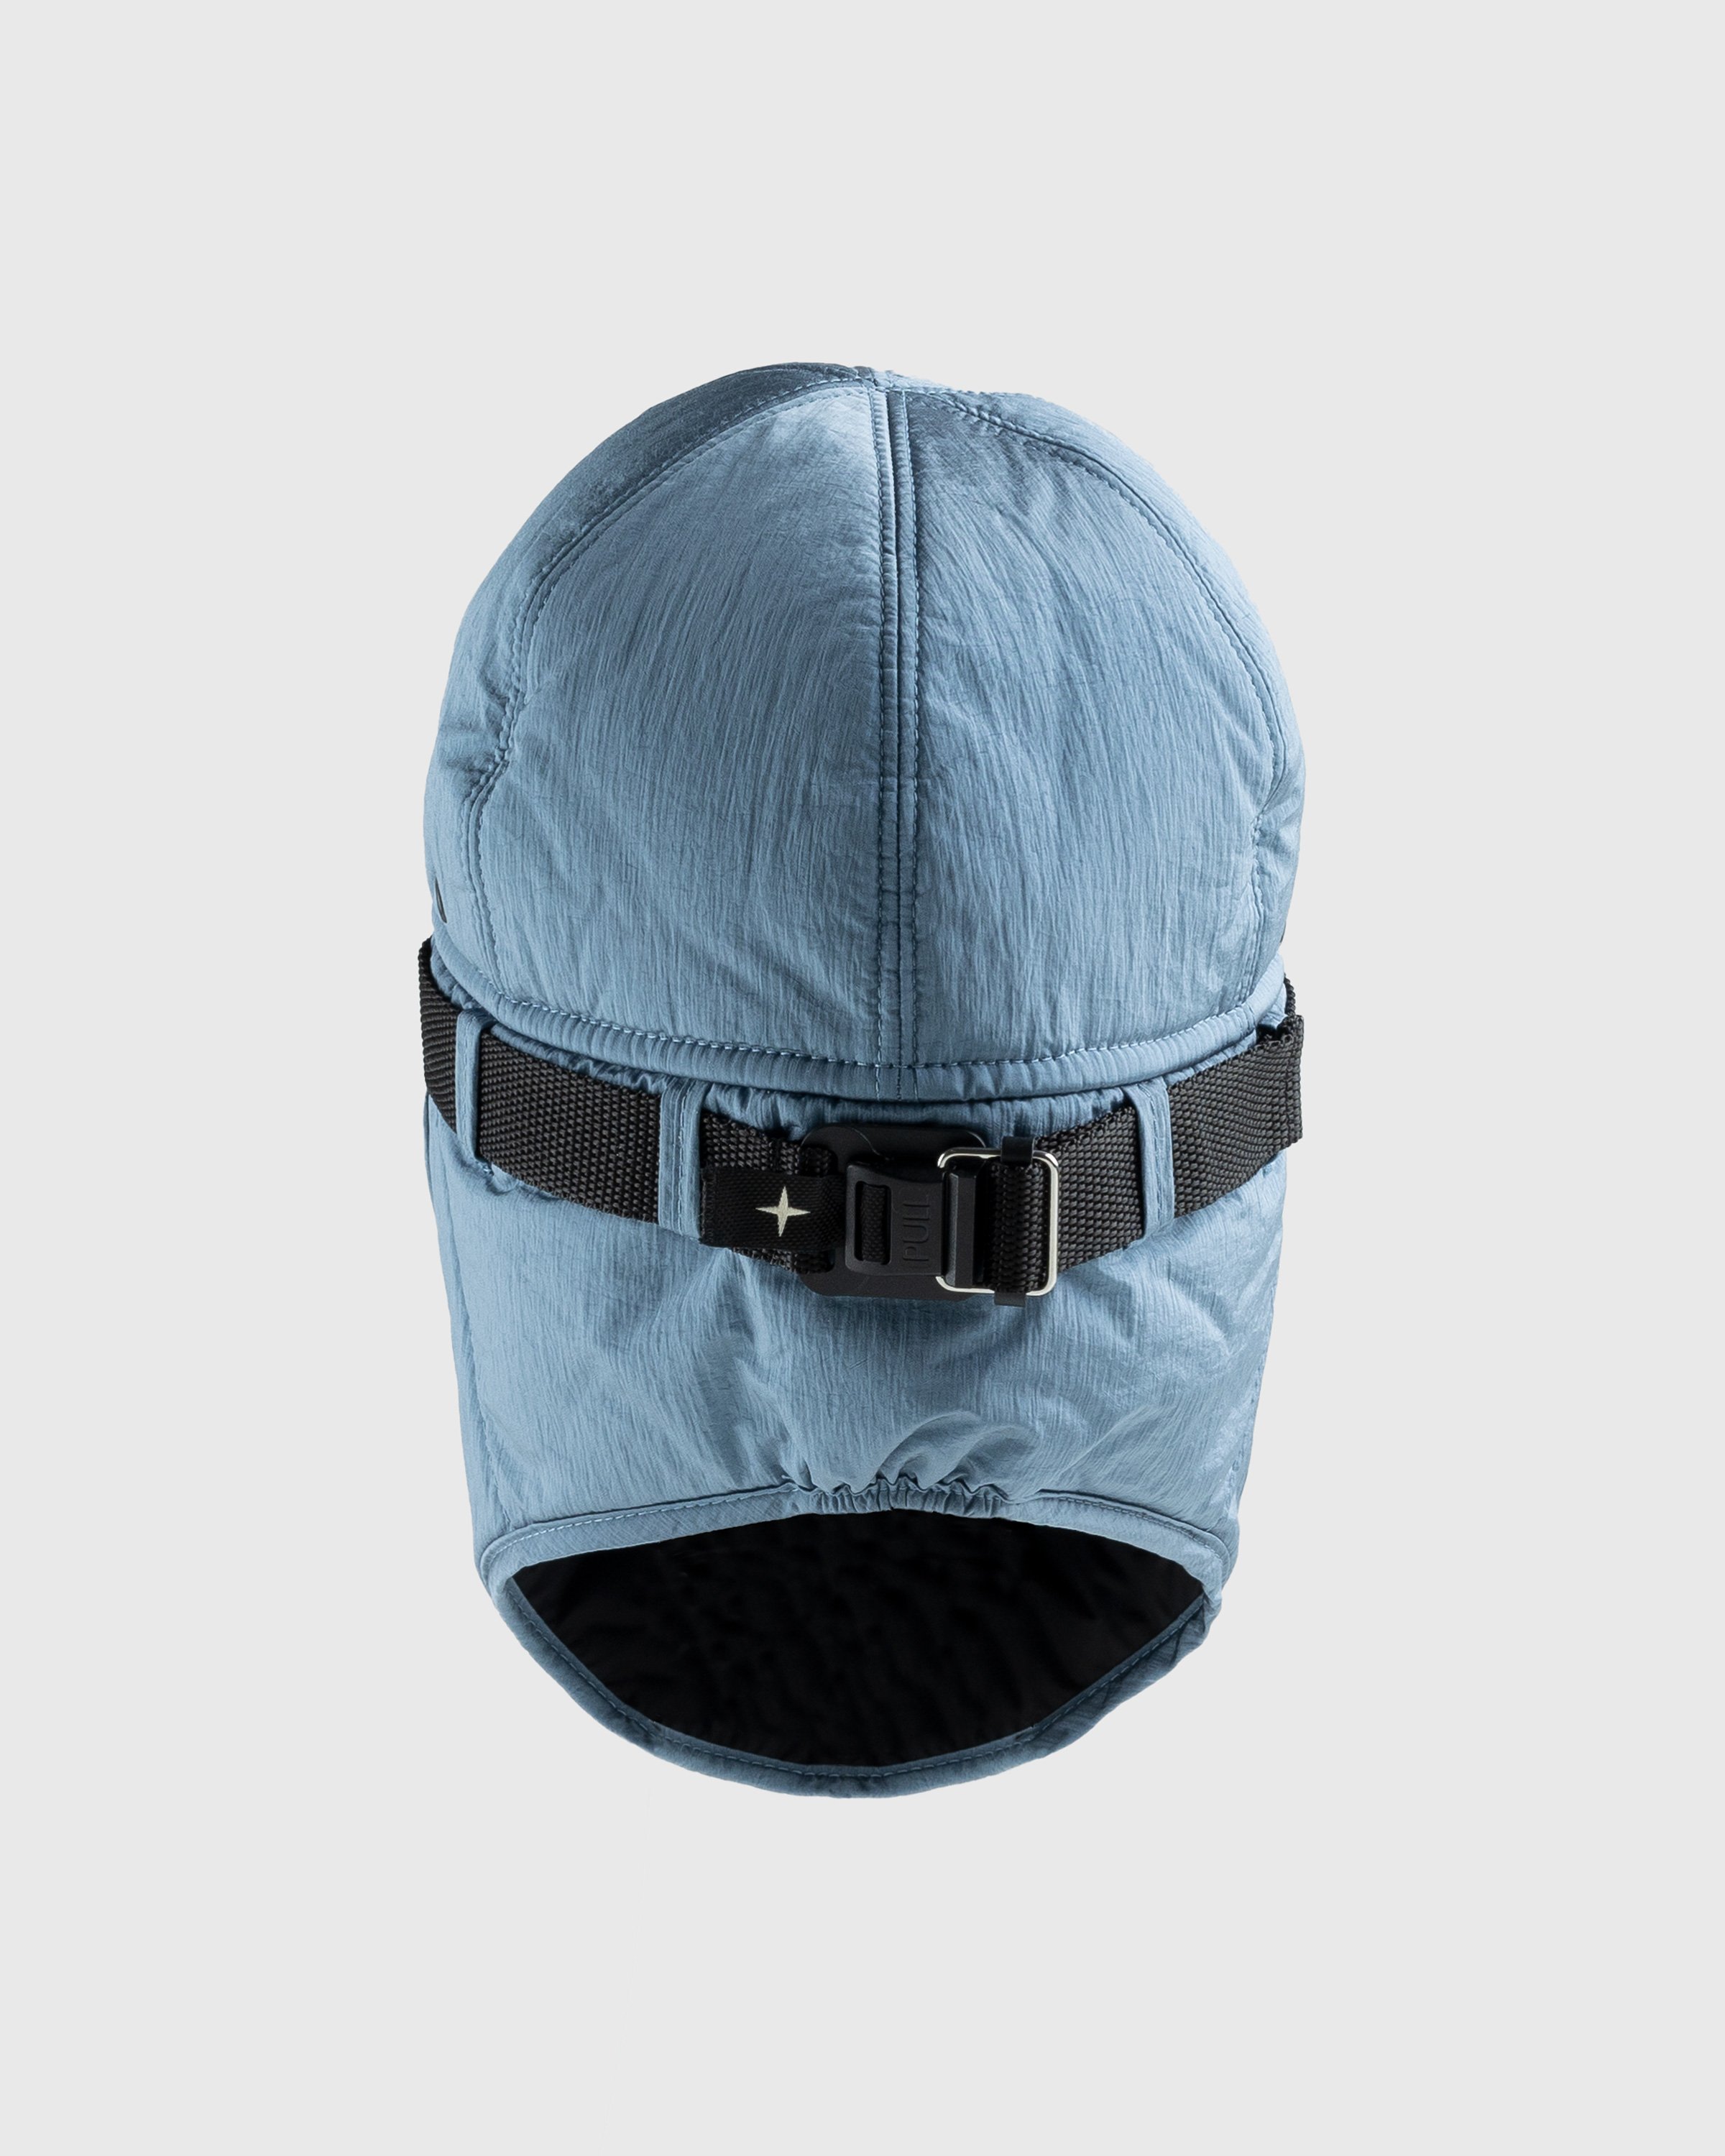 Stone Island - Nylon Metal Protective Hood Blue - Accessories - Blue - Image 3